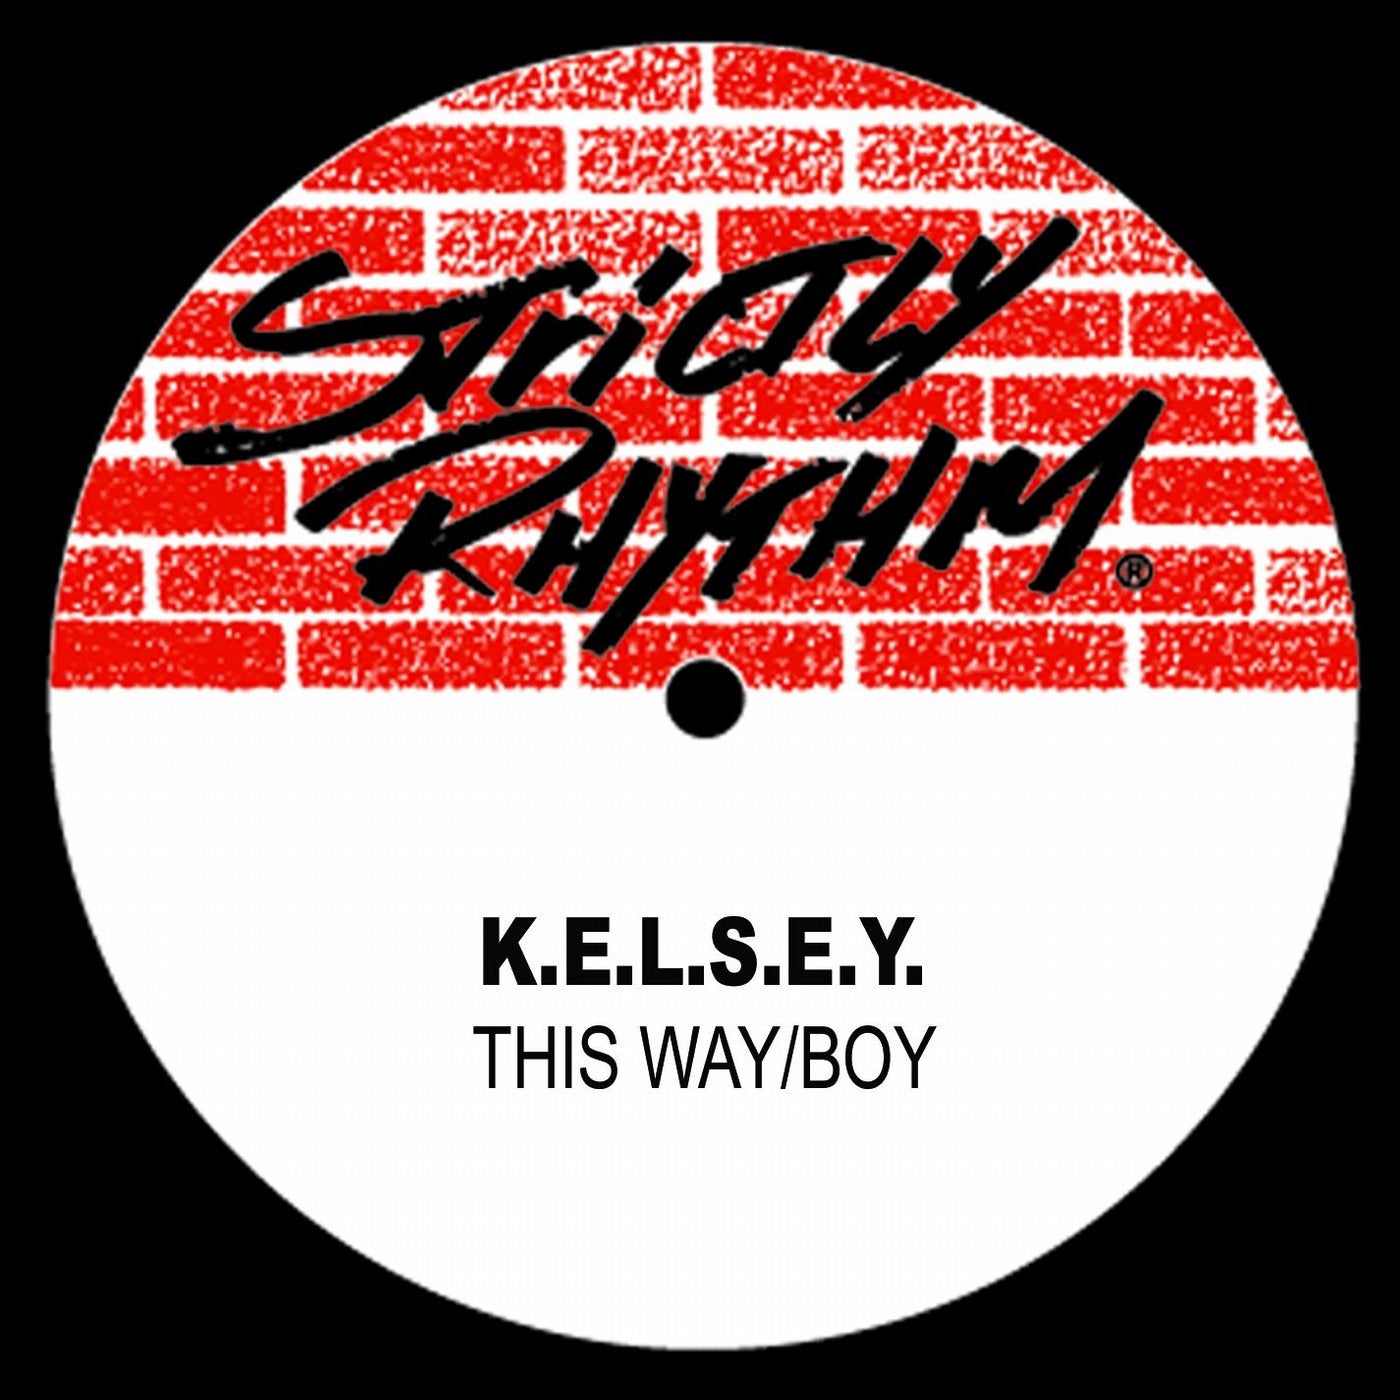 This Way / Boy